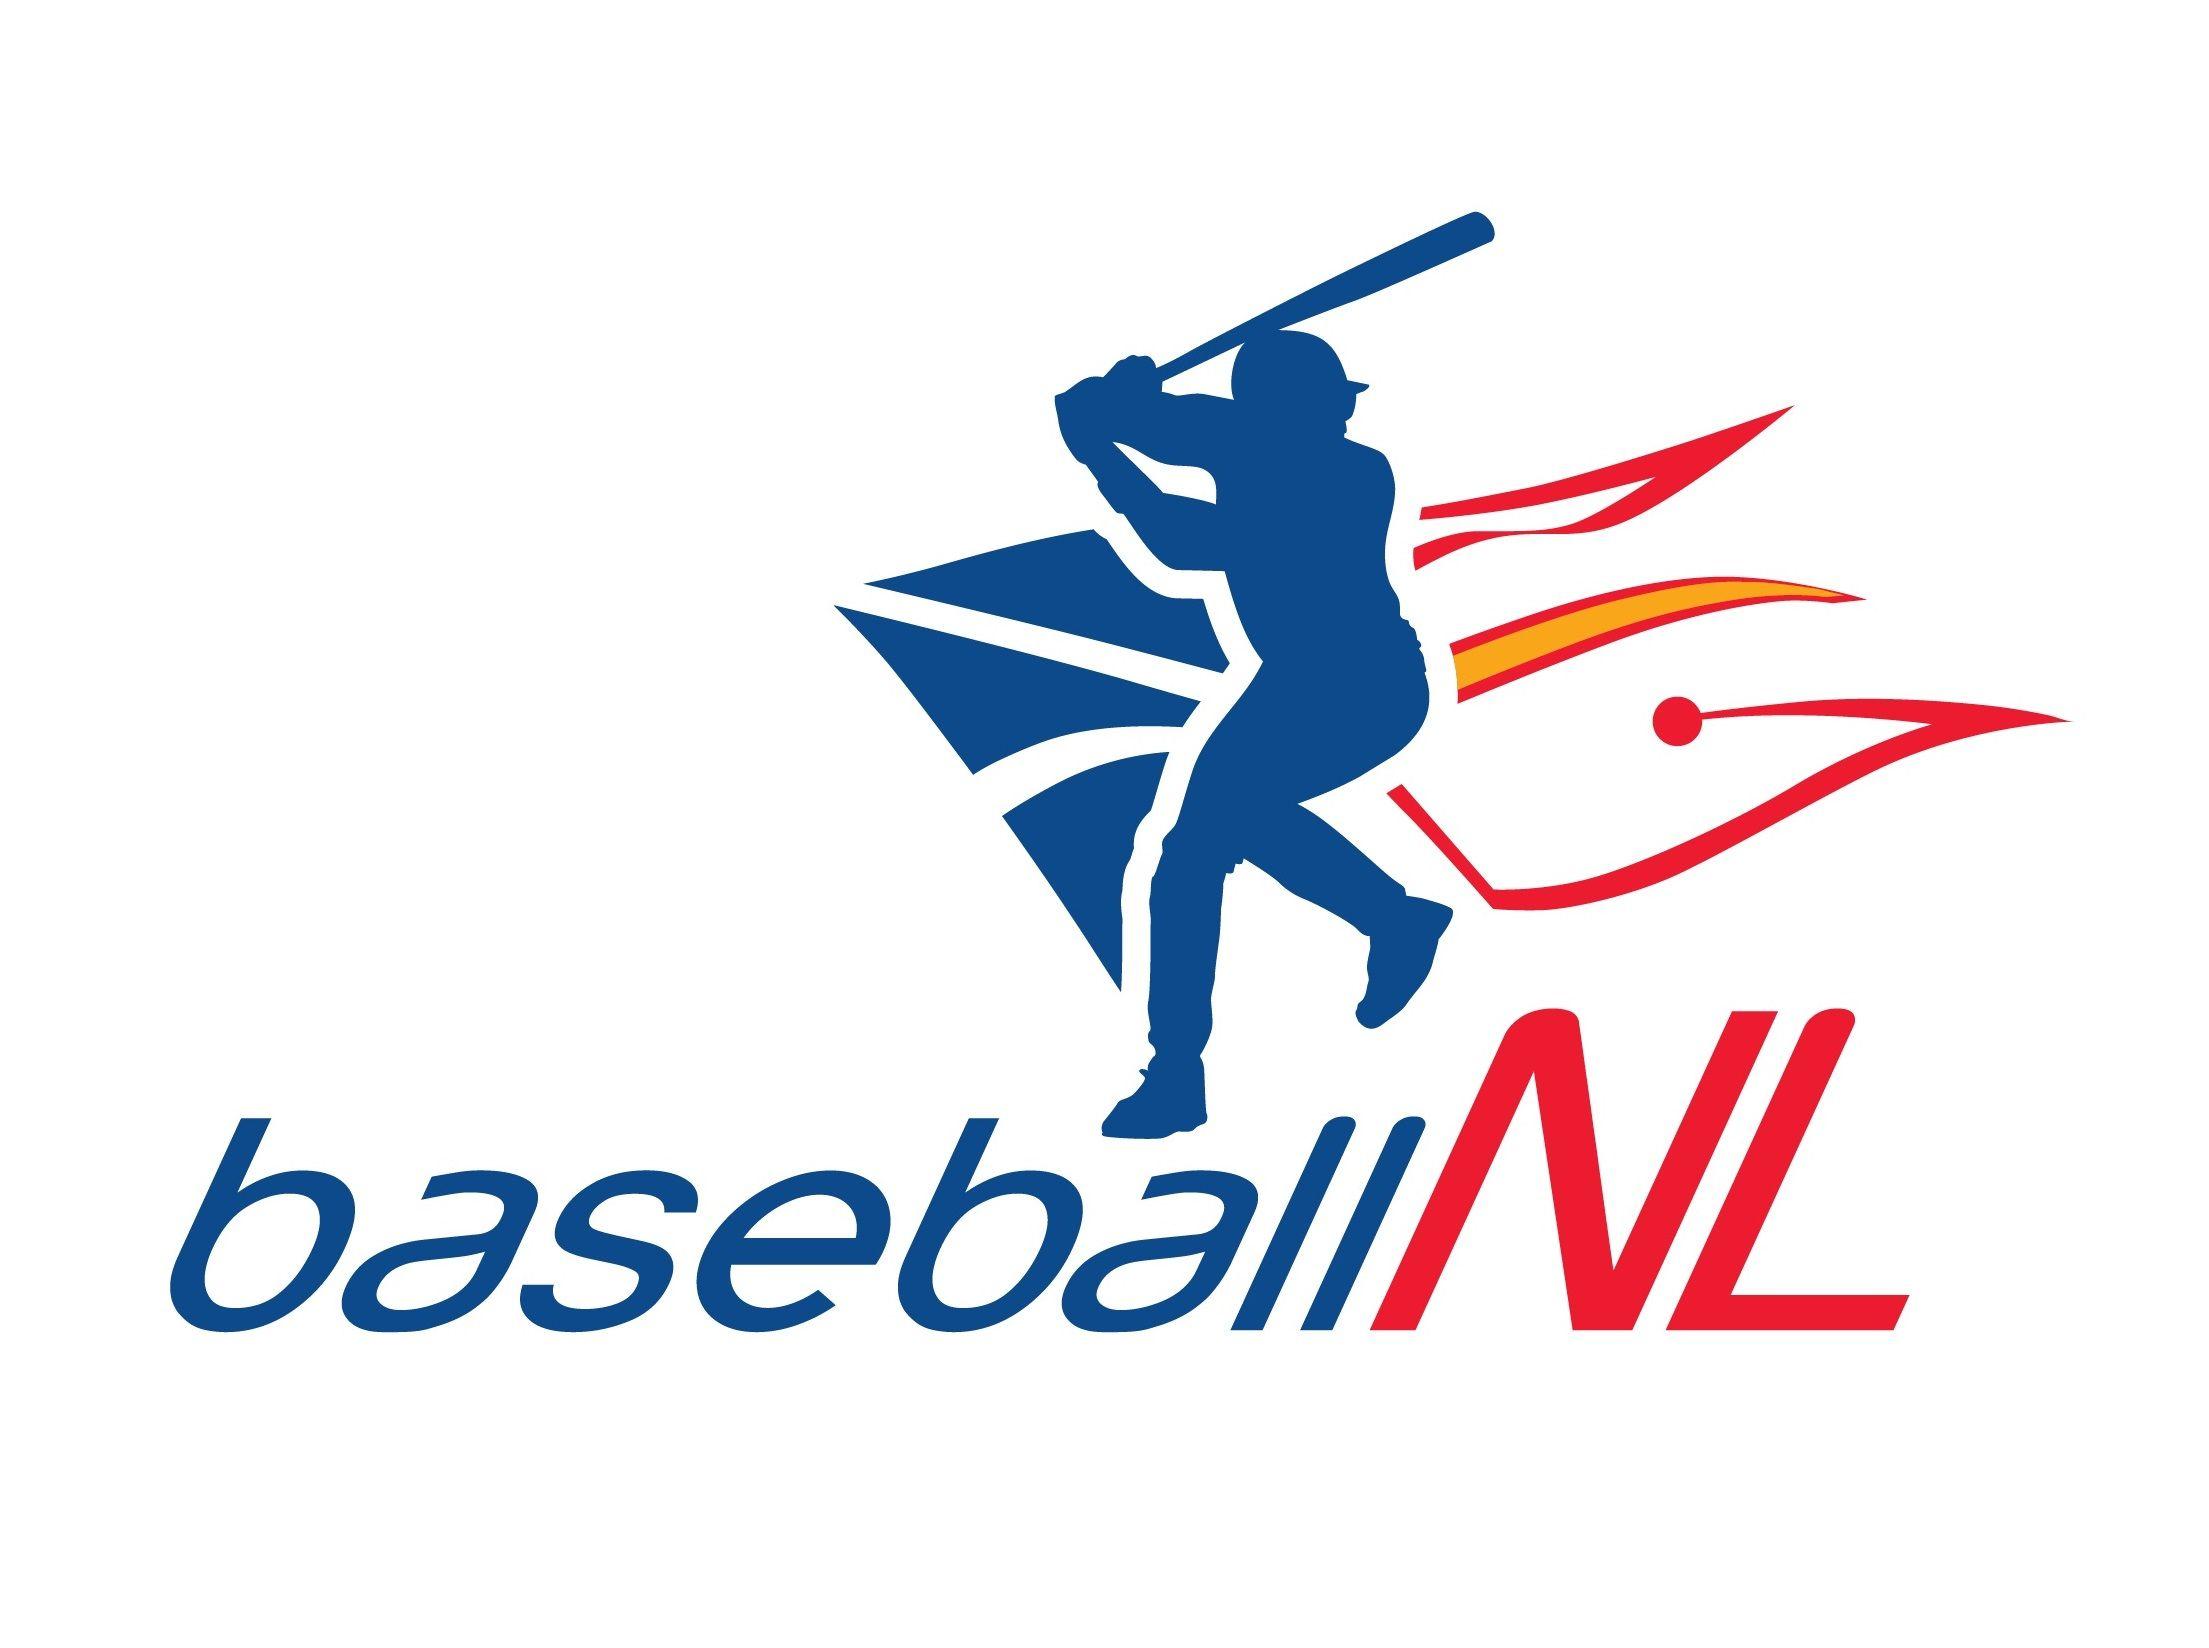 Www.baseball Logo - Baseball Canada